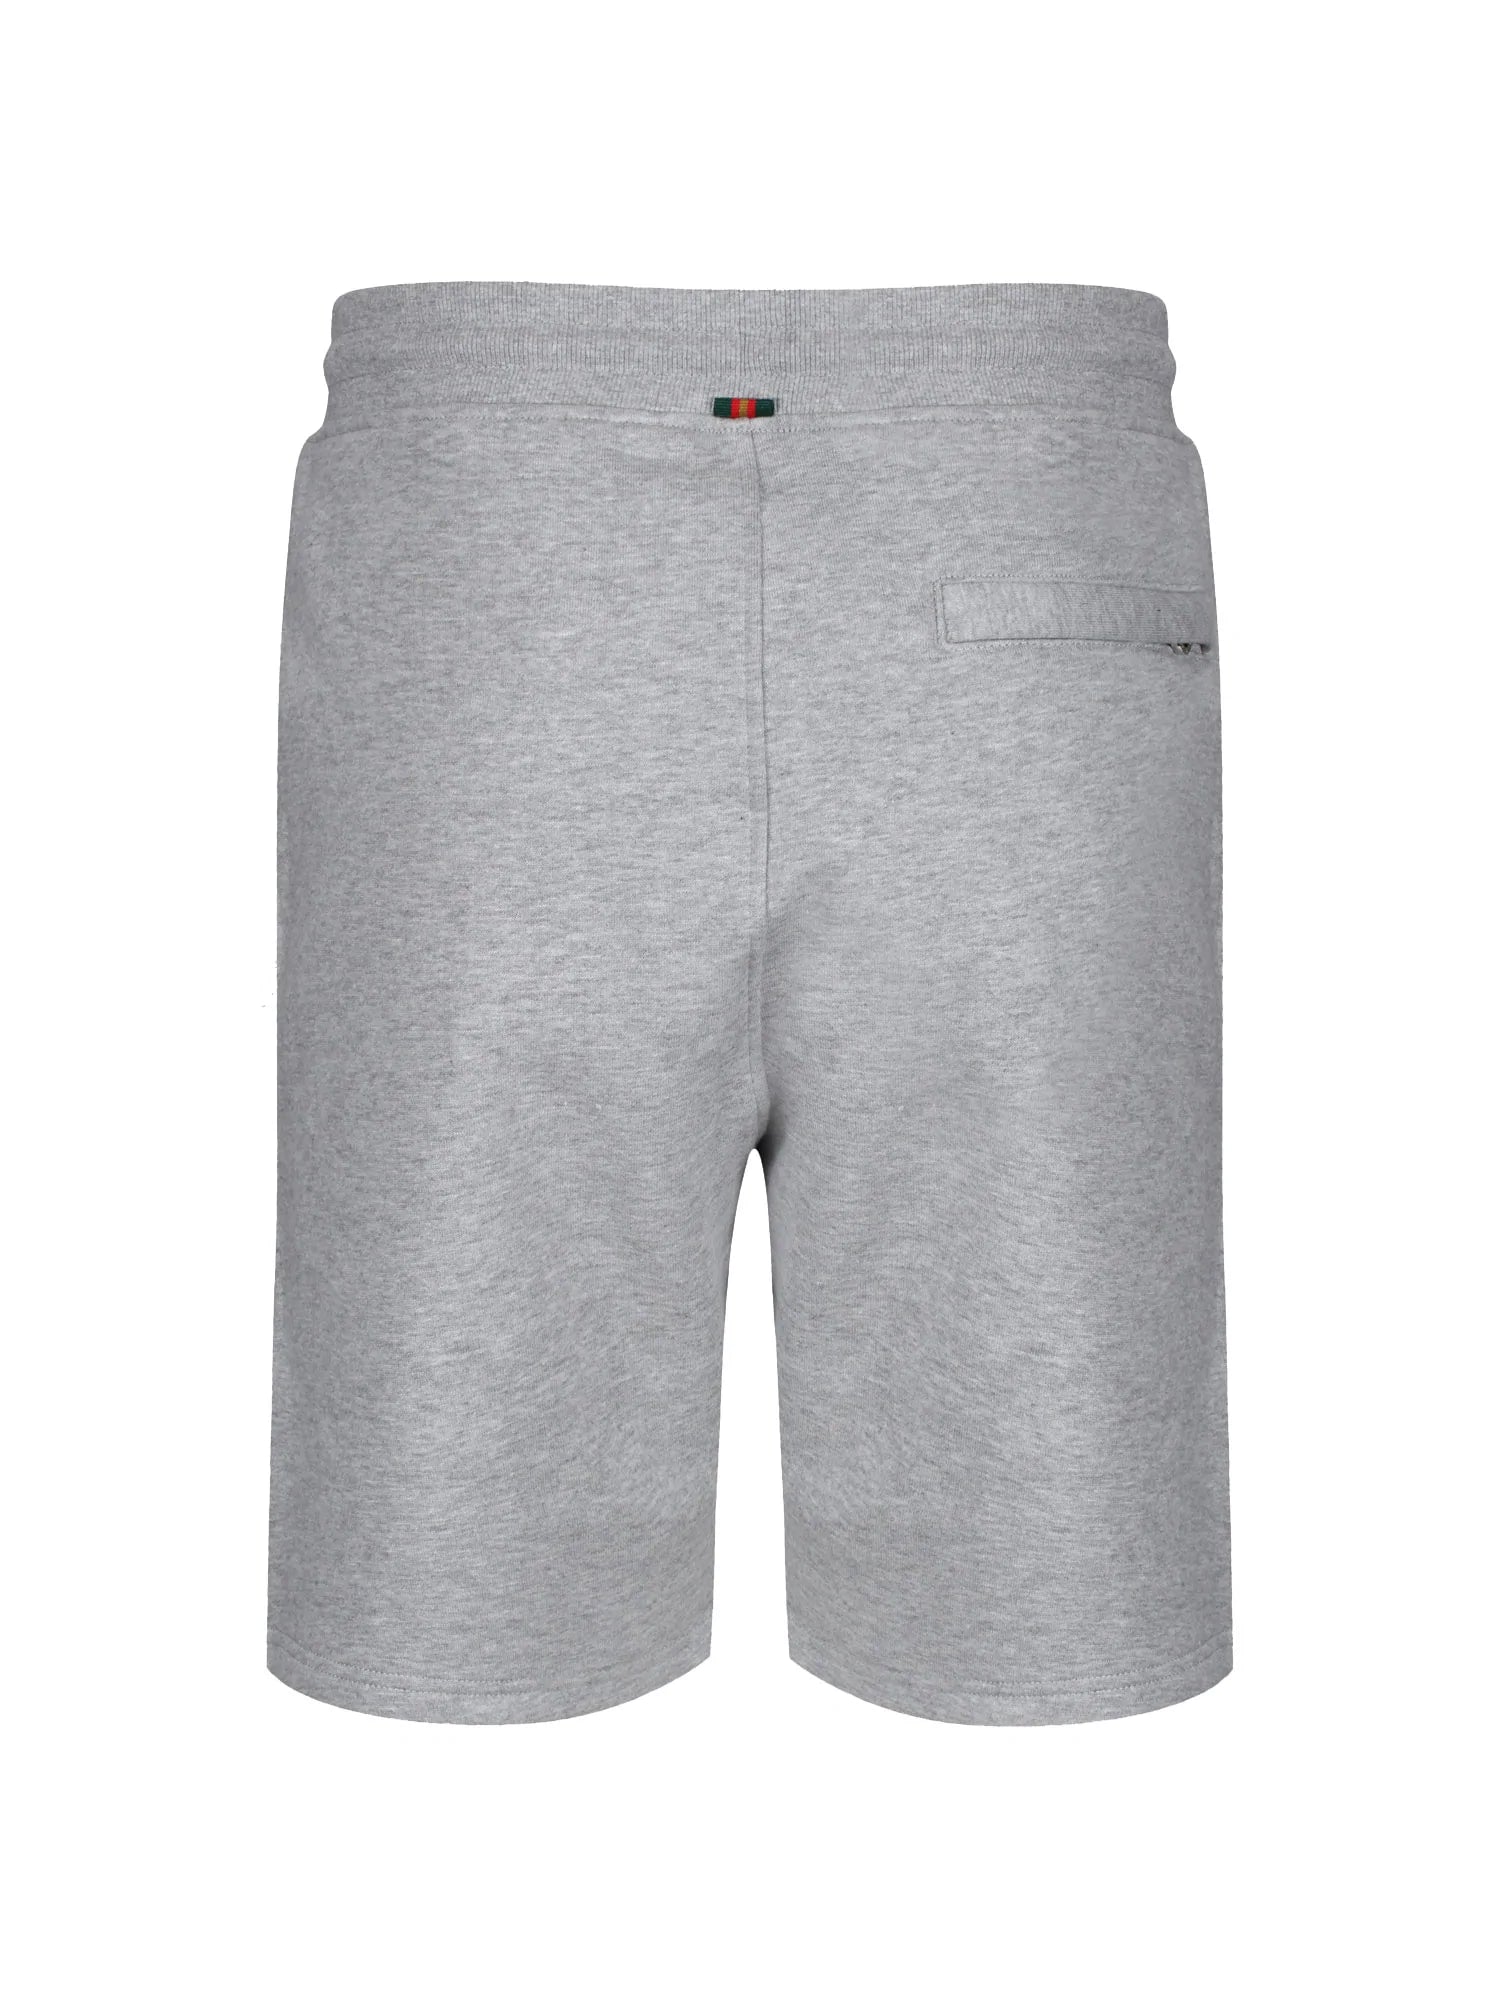 Luke Amsterdam 2 Sweat Shorts Marl Grey - Raw Menswear